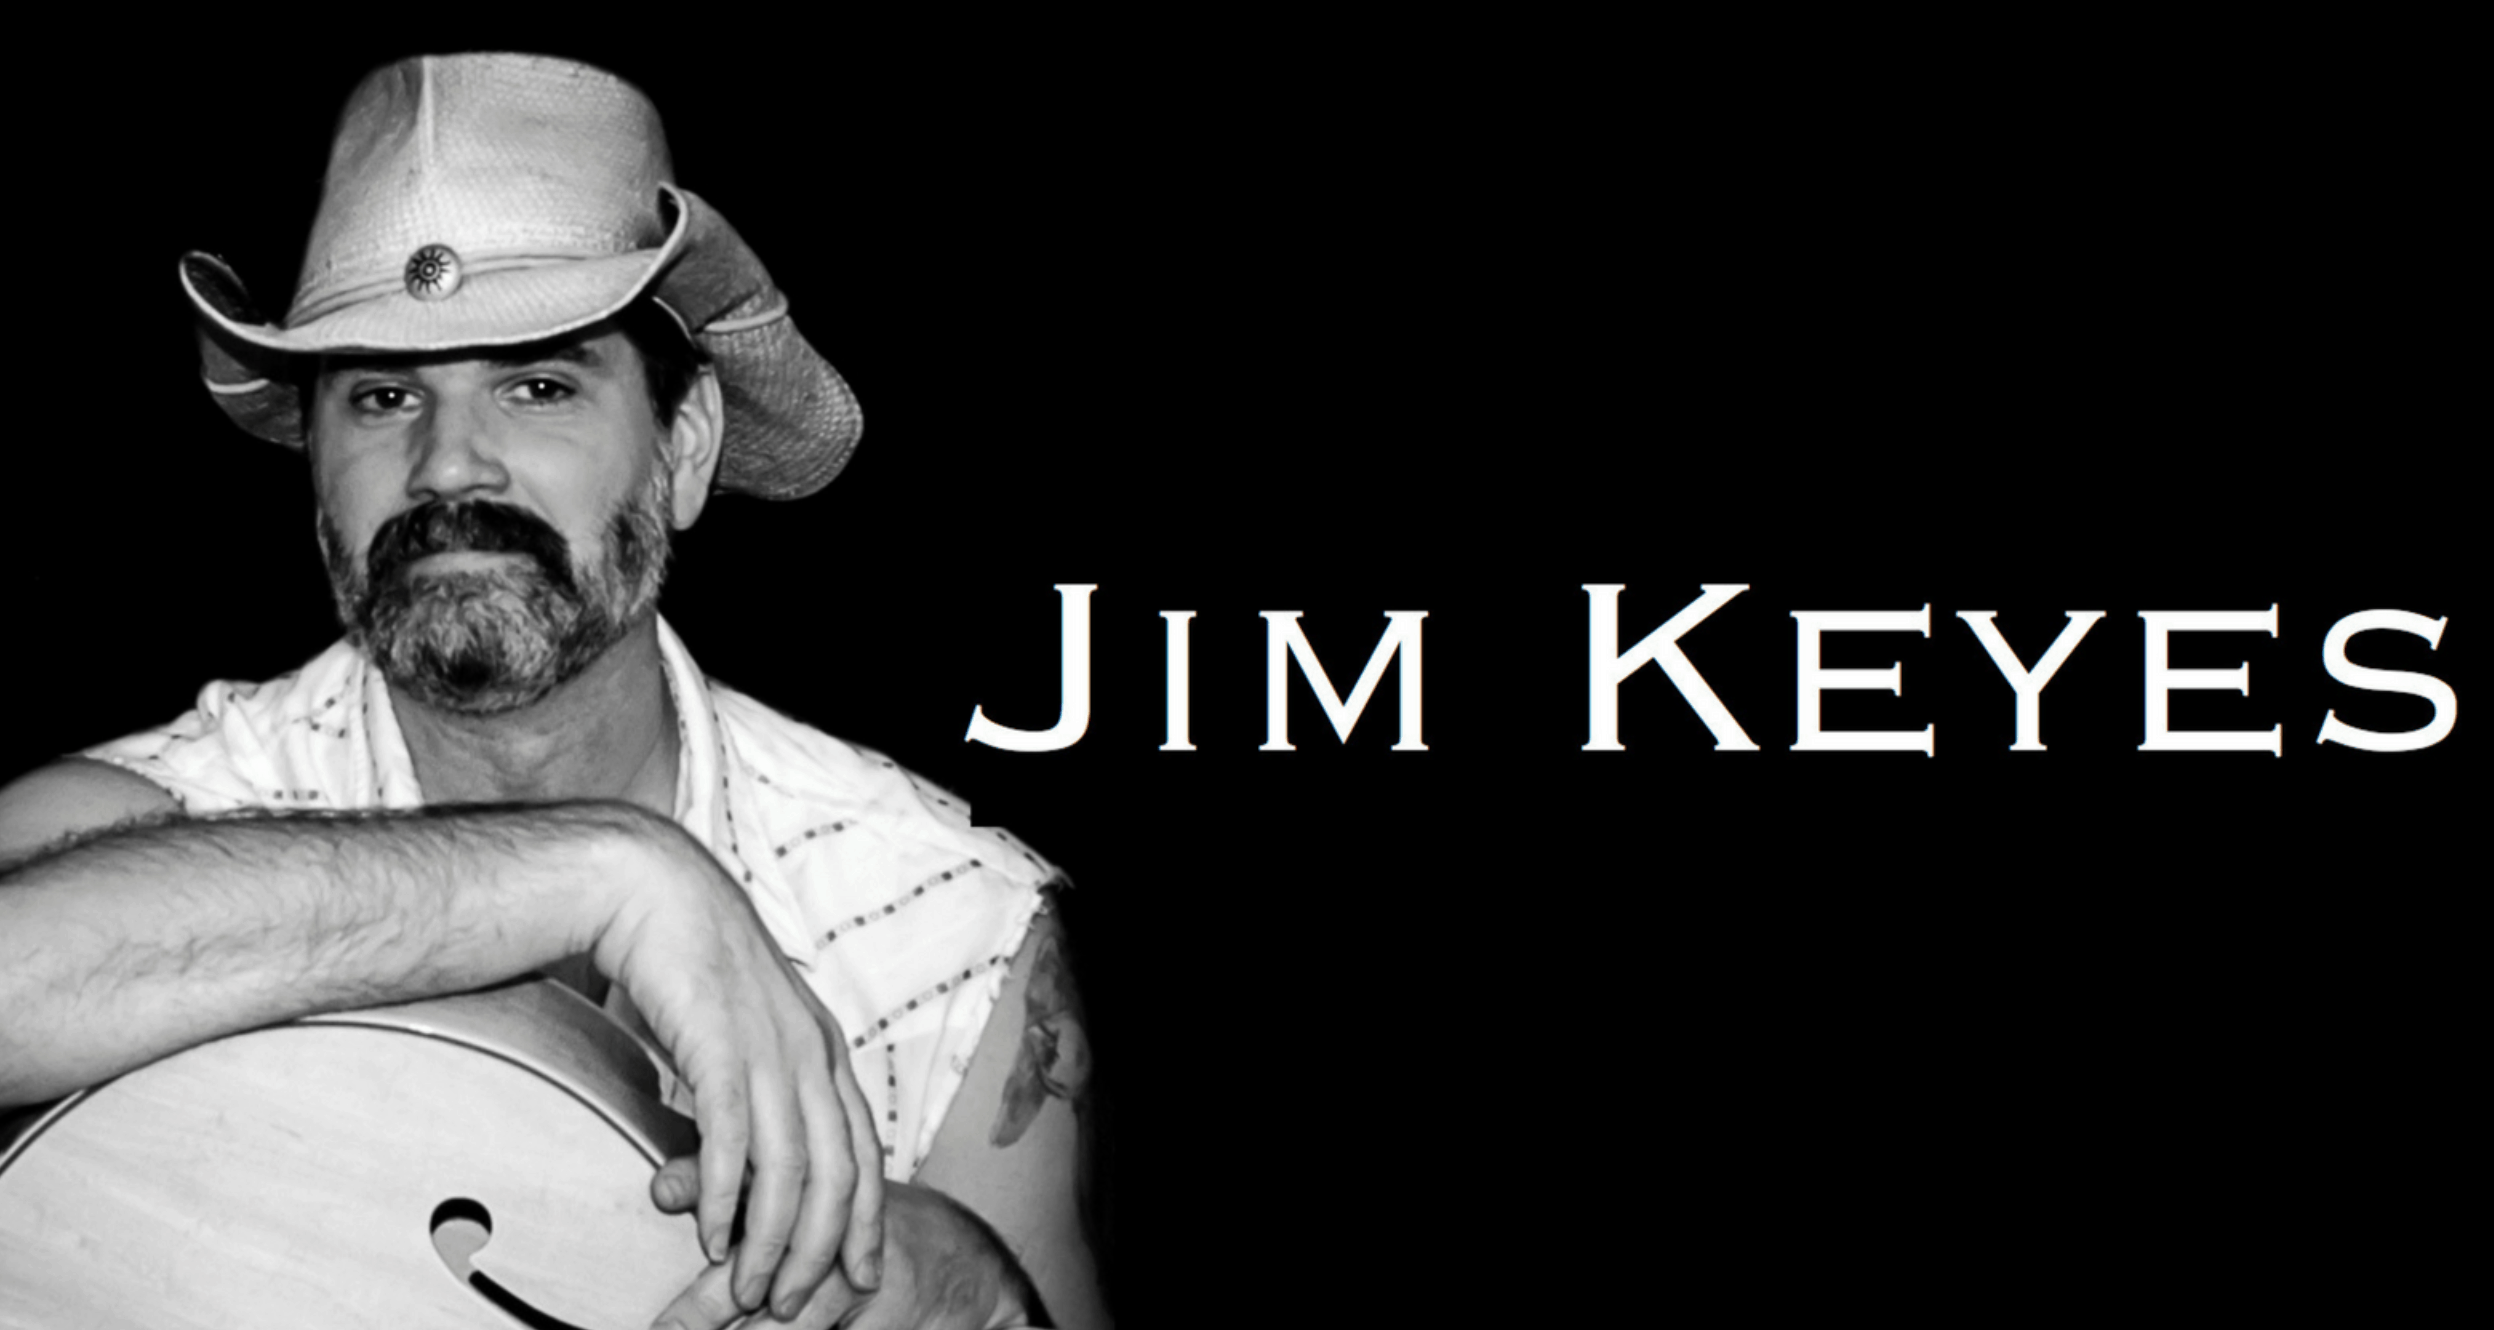 Jim Keys free concert